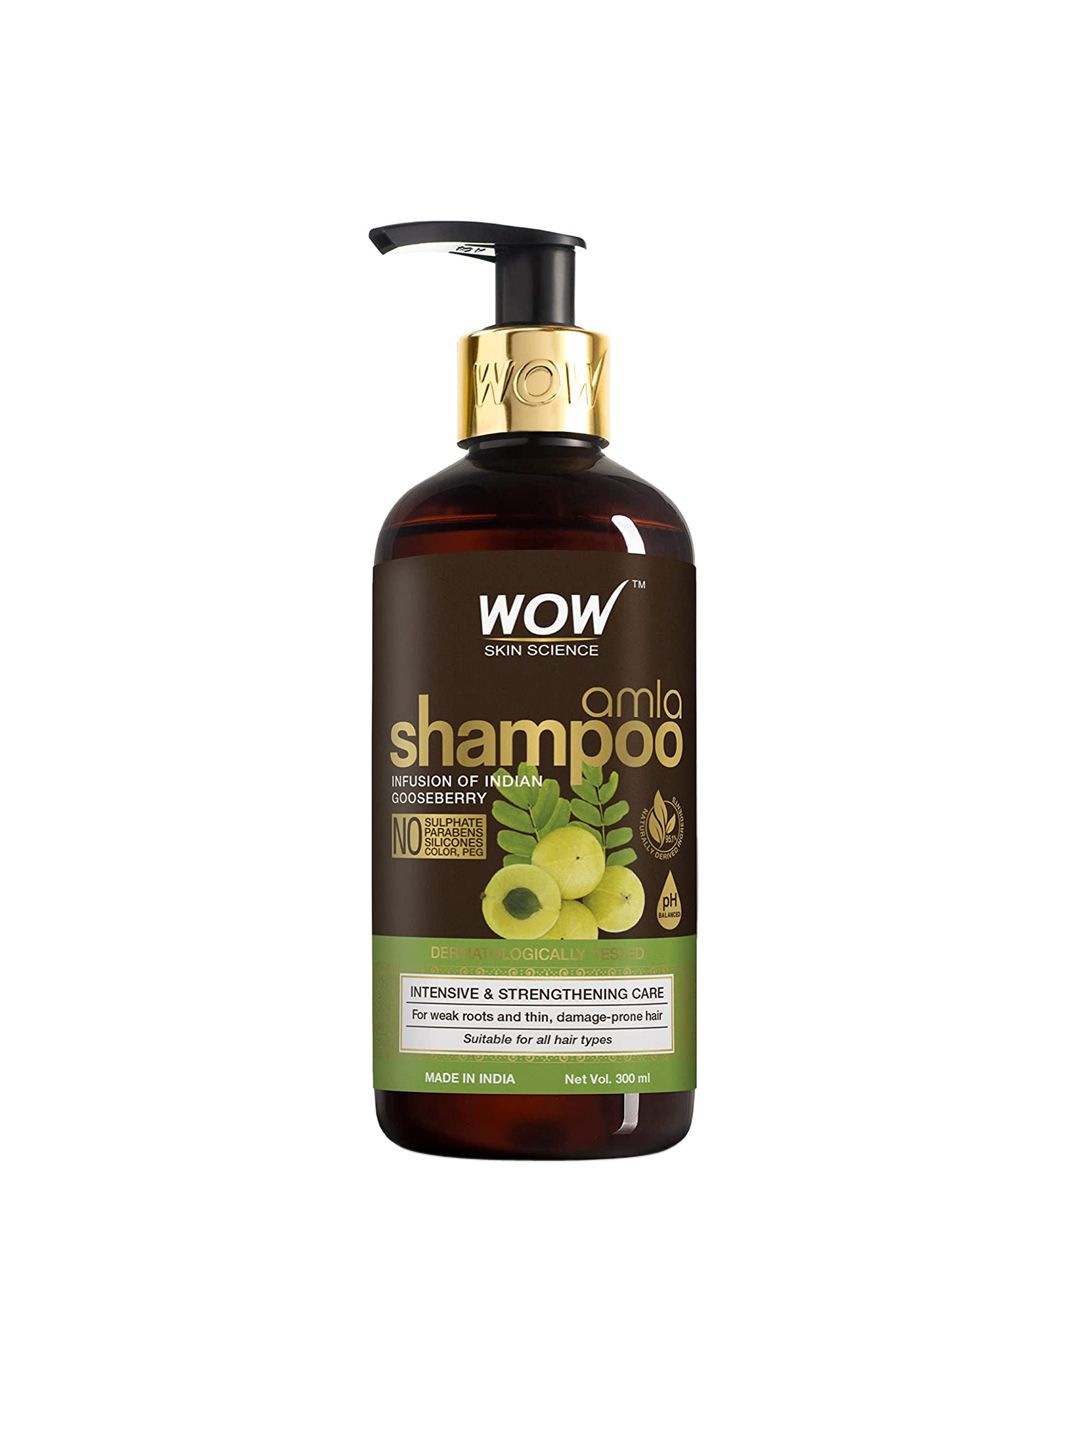 WOW SKIN SCIENCE Amla Shampoo For Weak Hair - 300ml Price in India